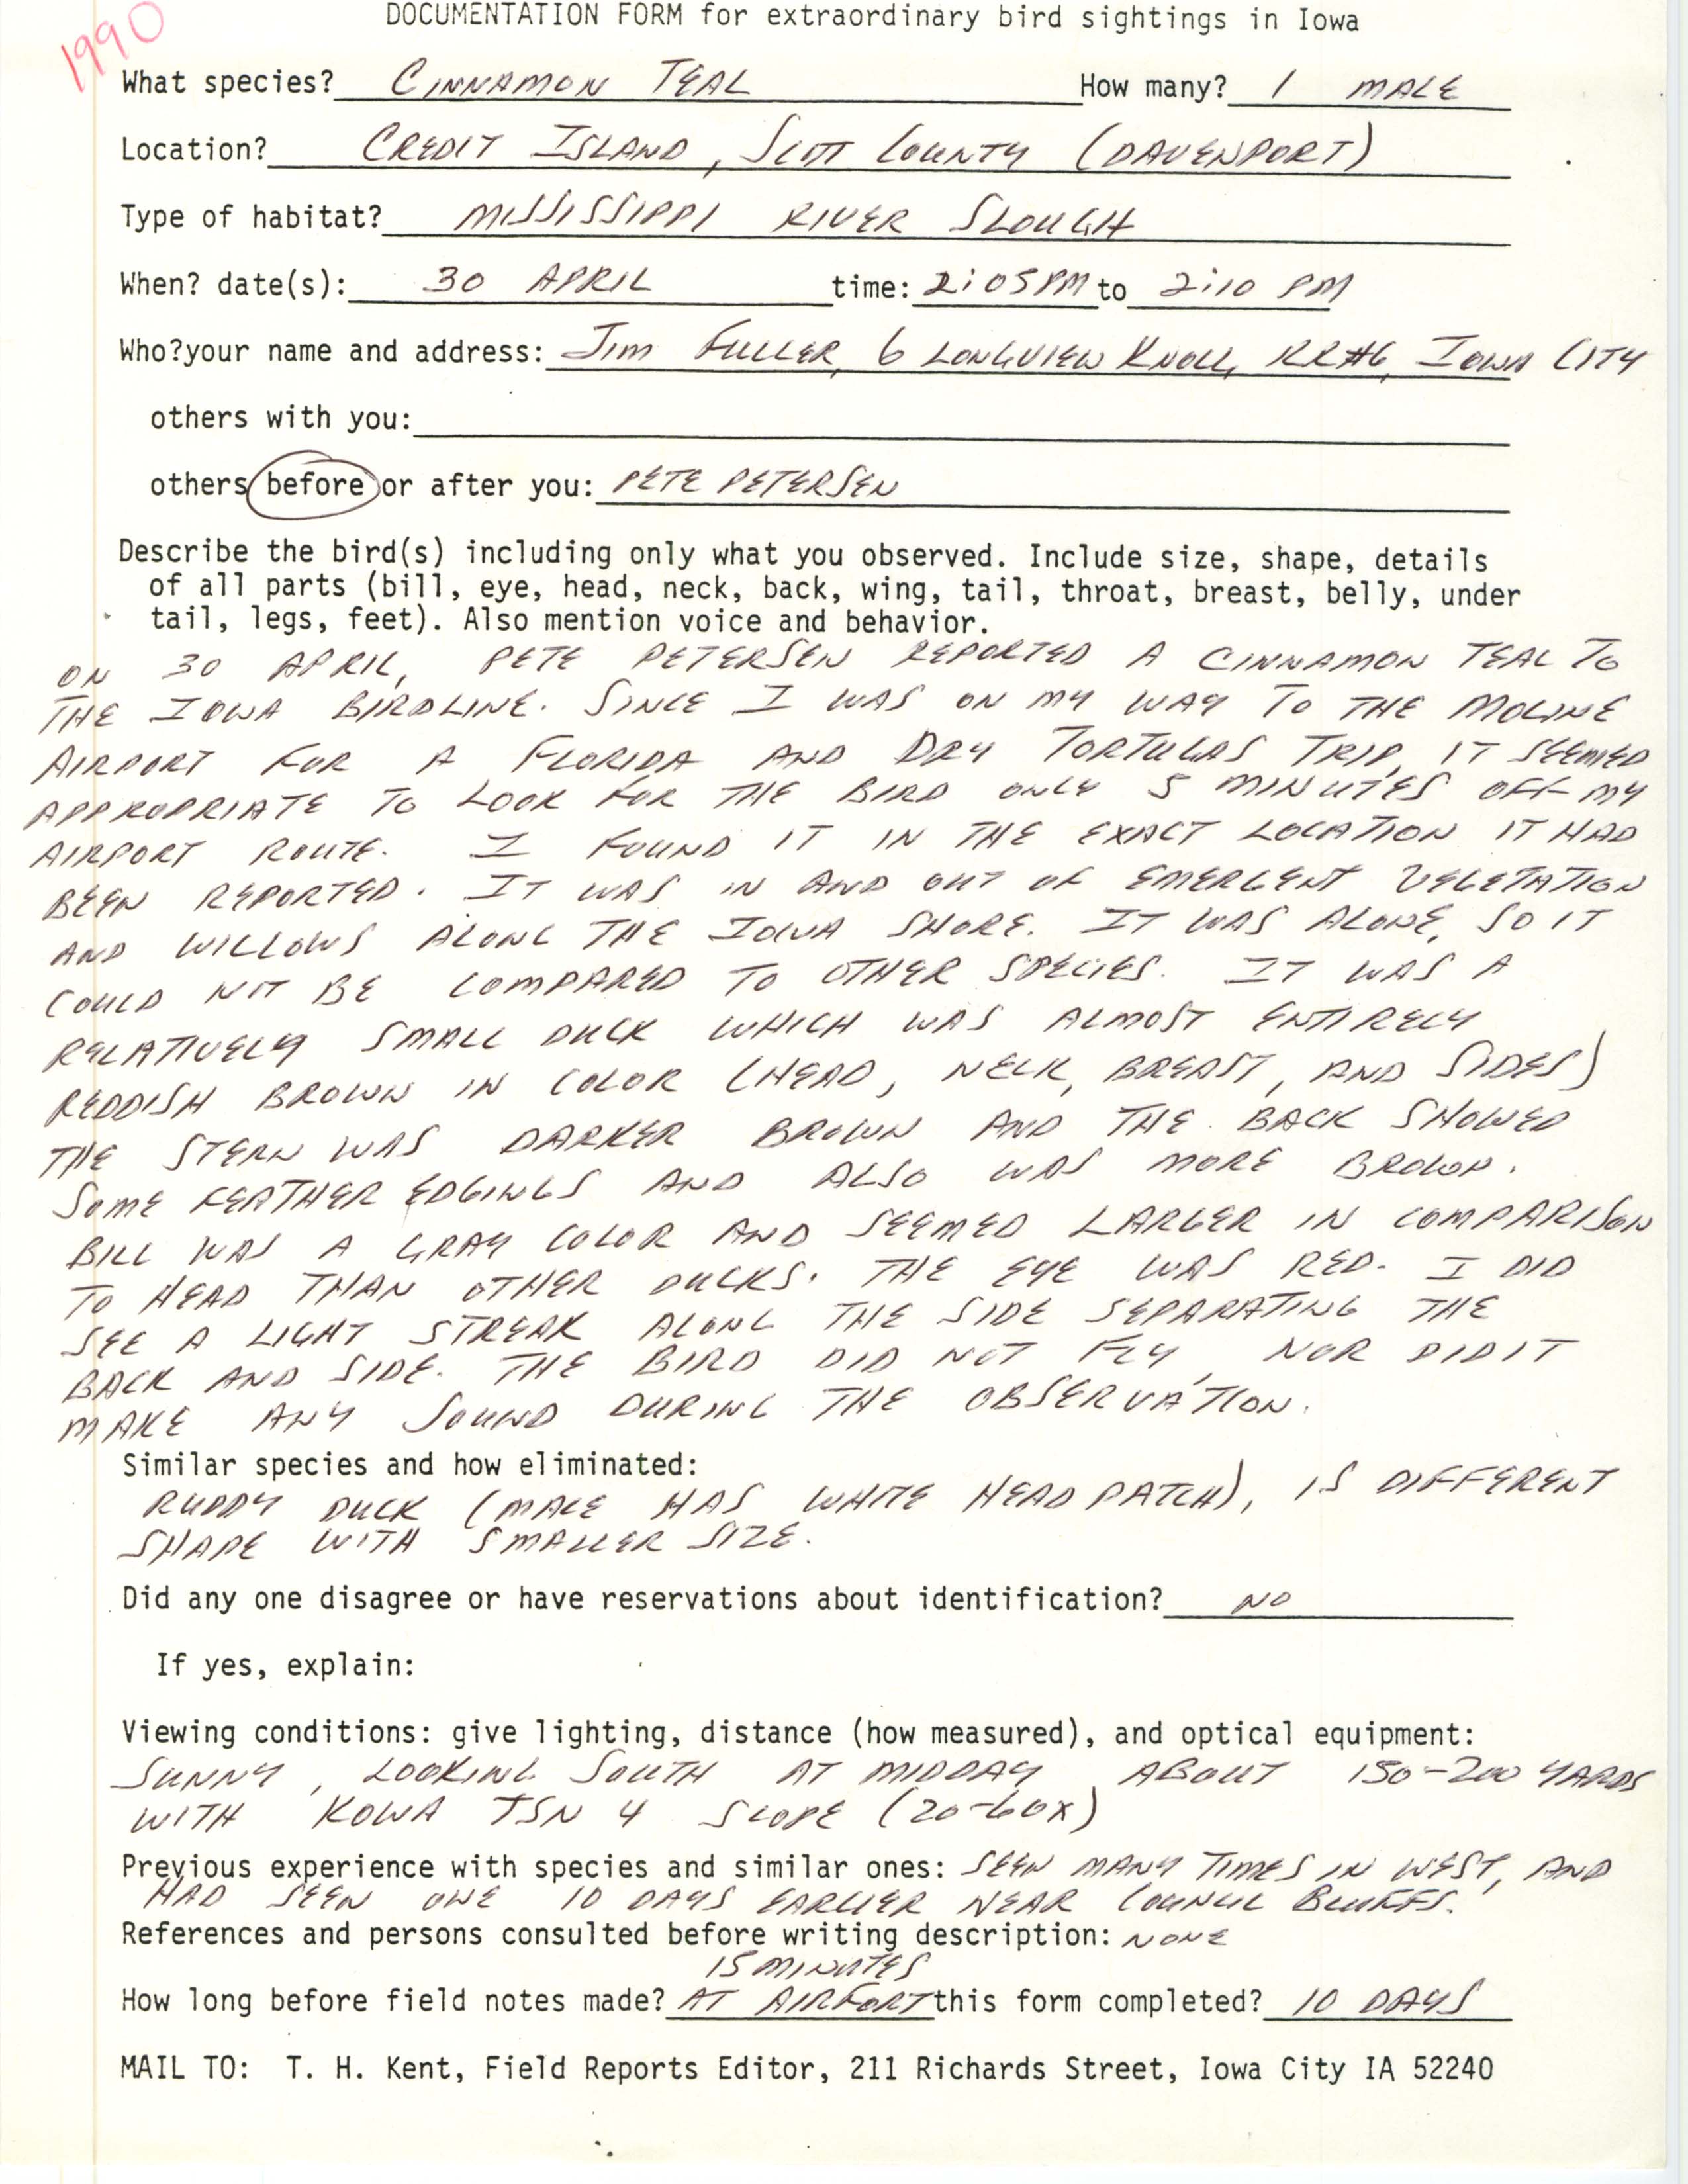 Rare bird documentation form for Cinnamon Teal at Credit Island, 1990